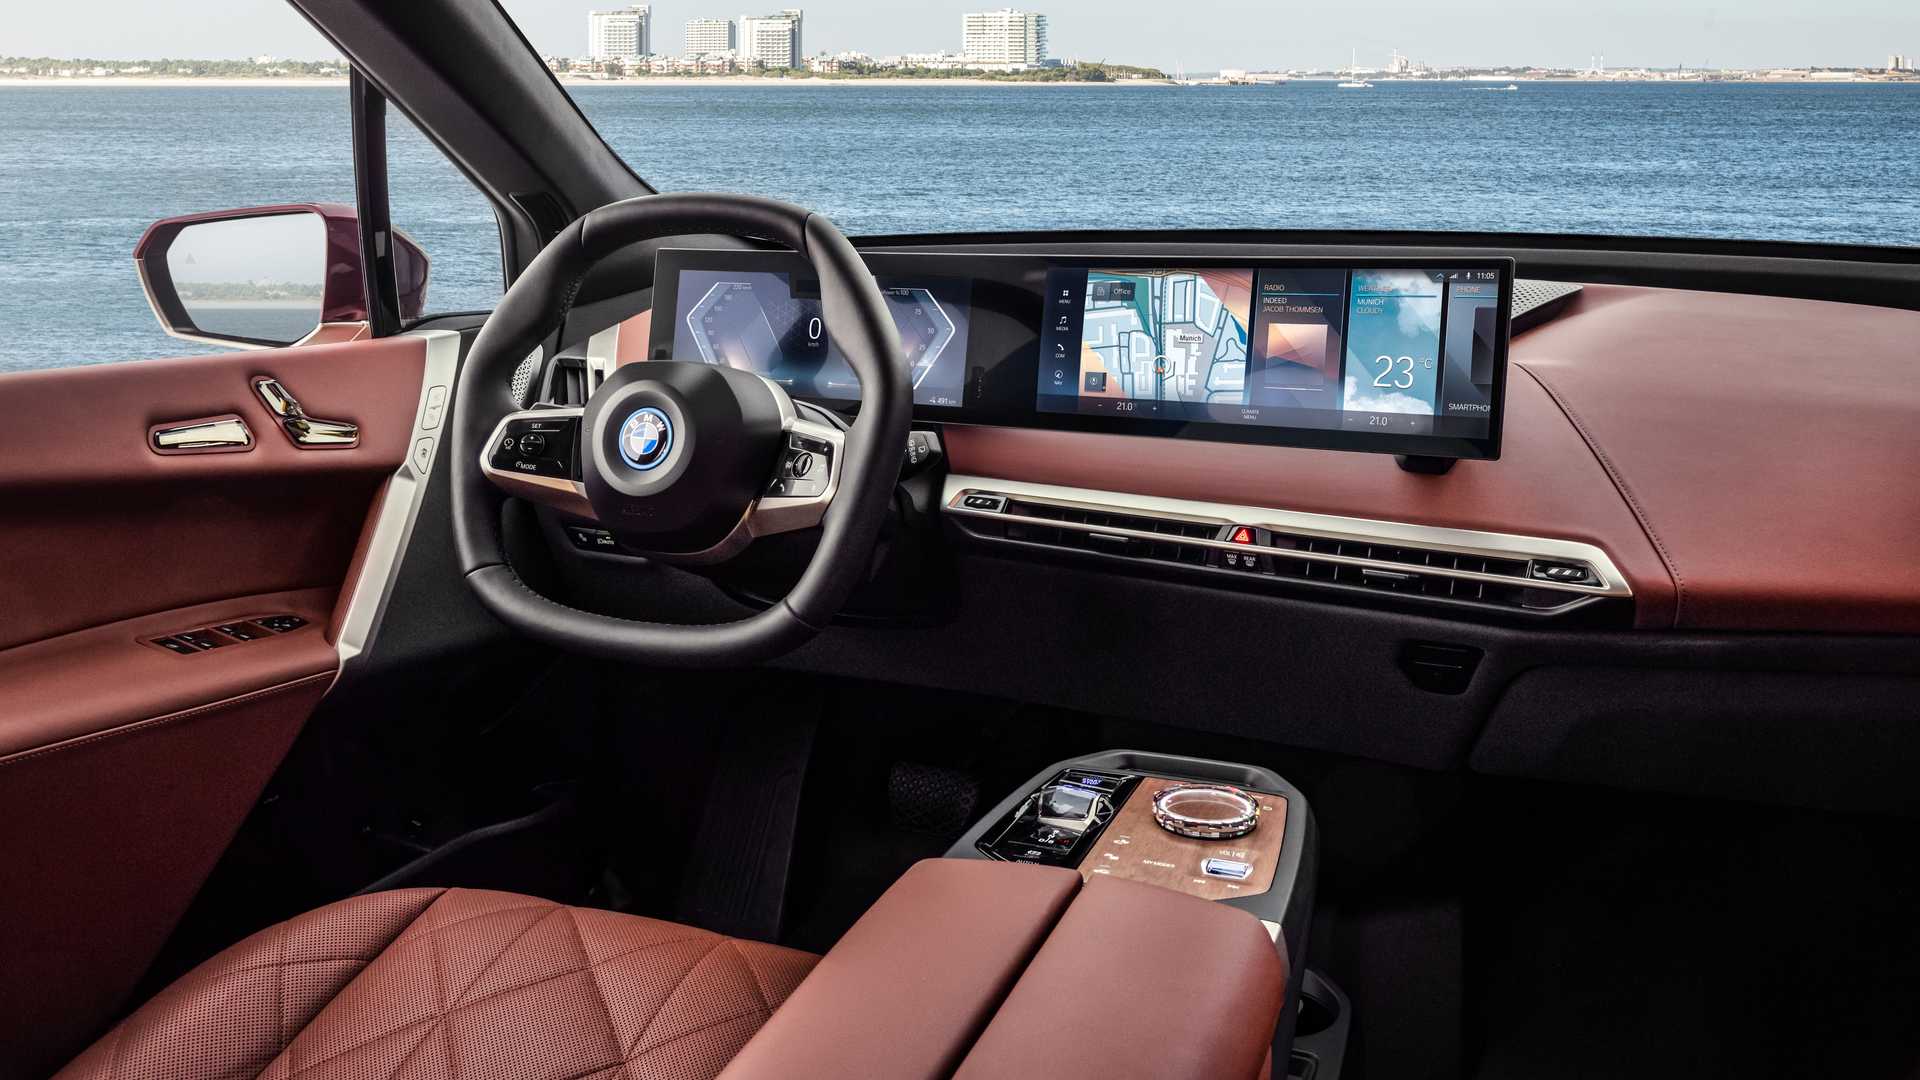 BMW iX to Feature Digital Key Plus Technology - The Next Avenue